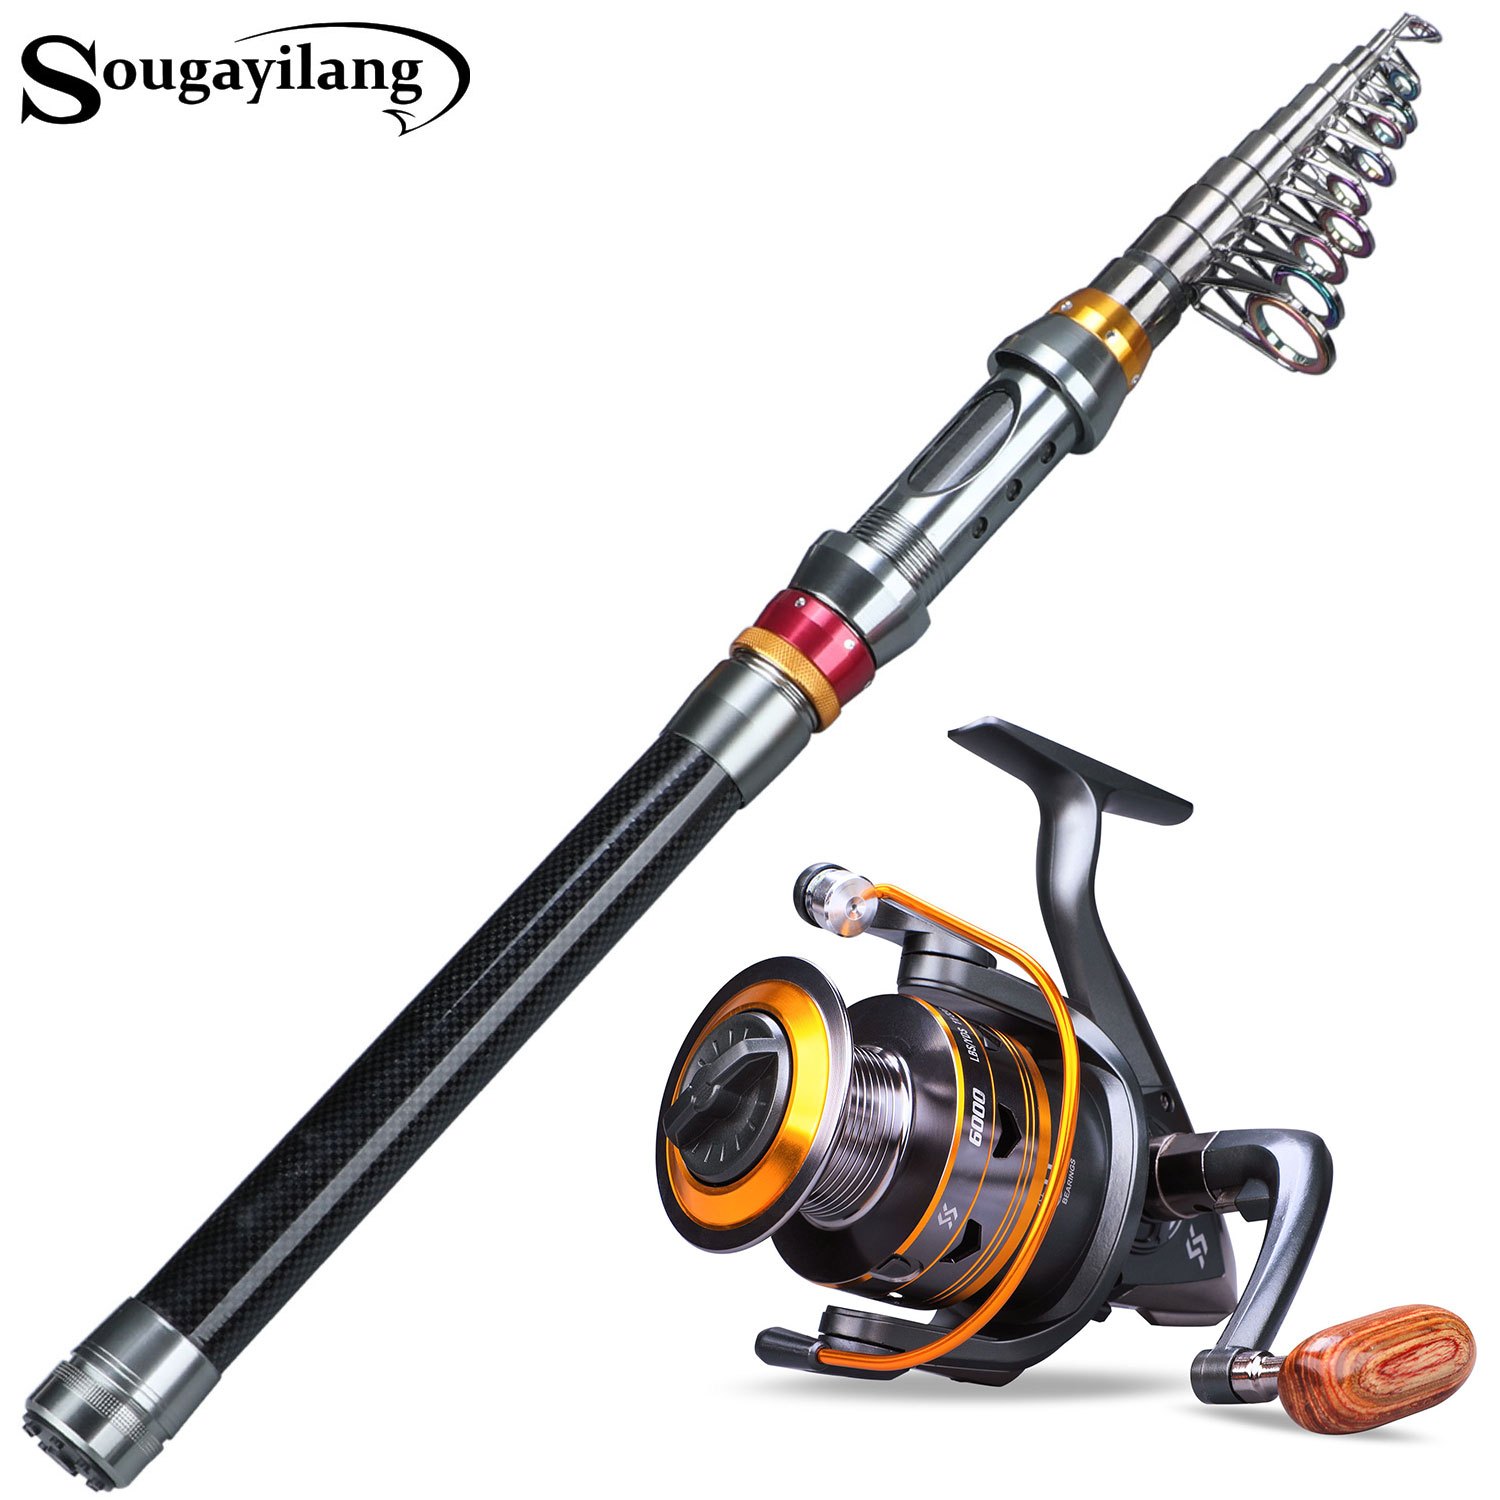 Sougayilang Telescopic Fishing Rods and Spinning Fishing Reel